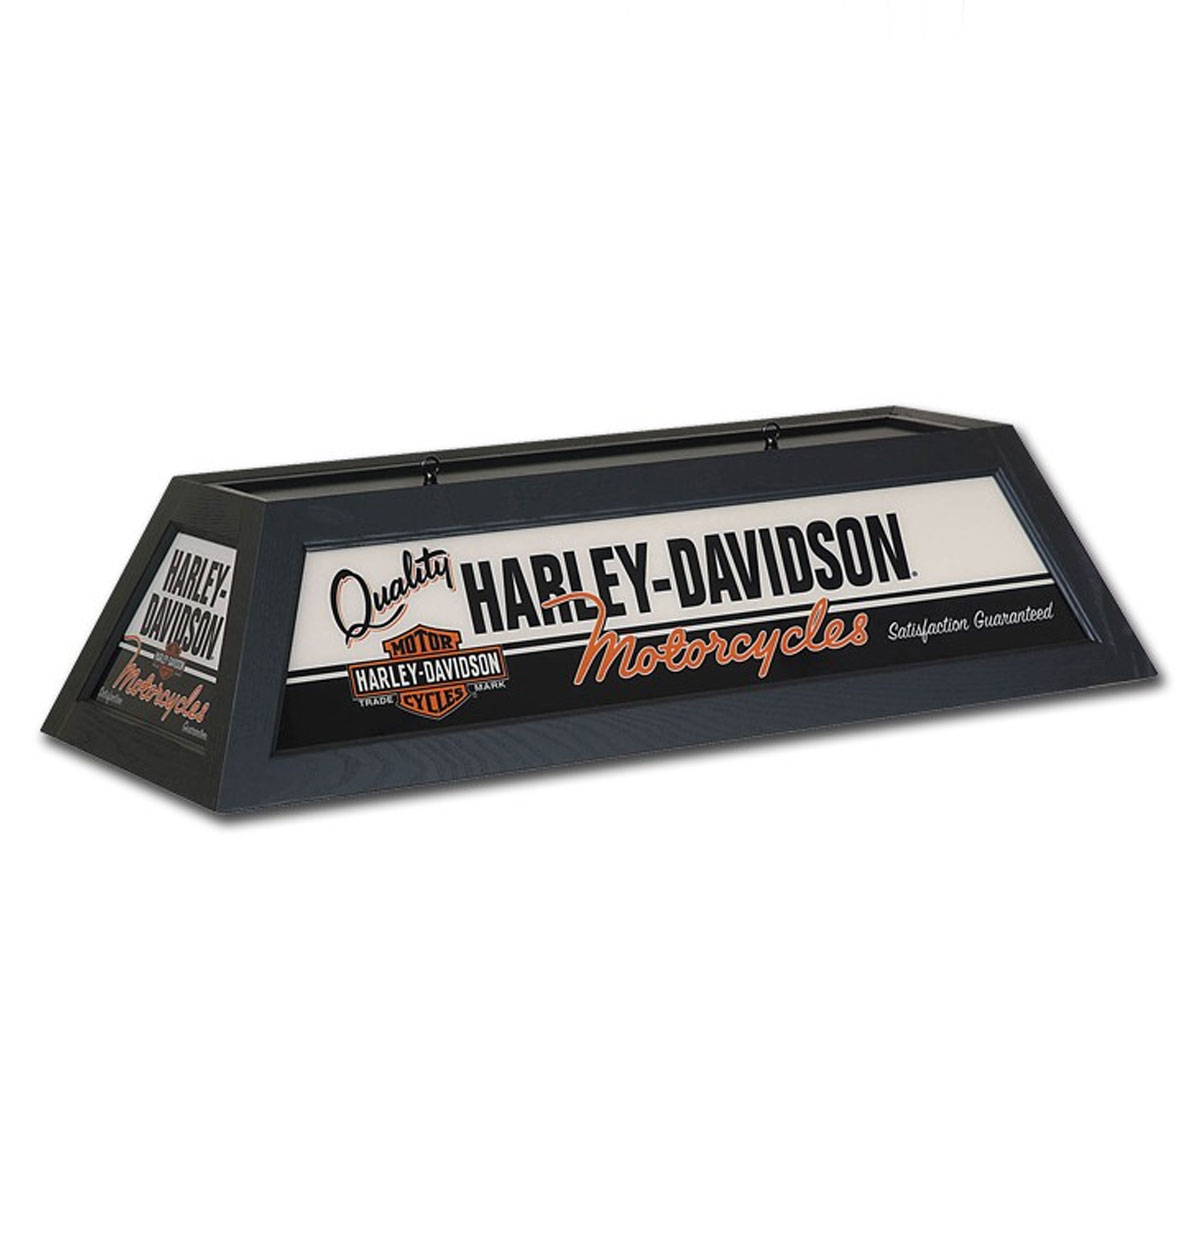 Harley-Davidson Quality Motorcycles Billiard Lamp - Black Finish